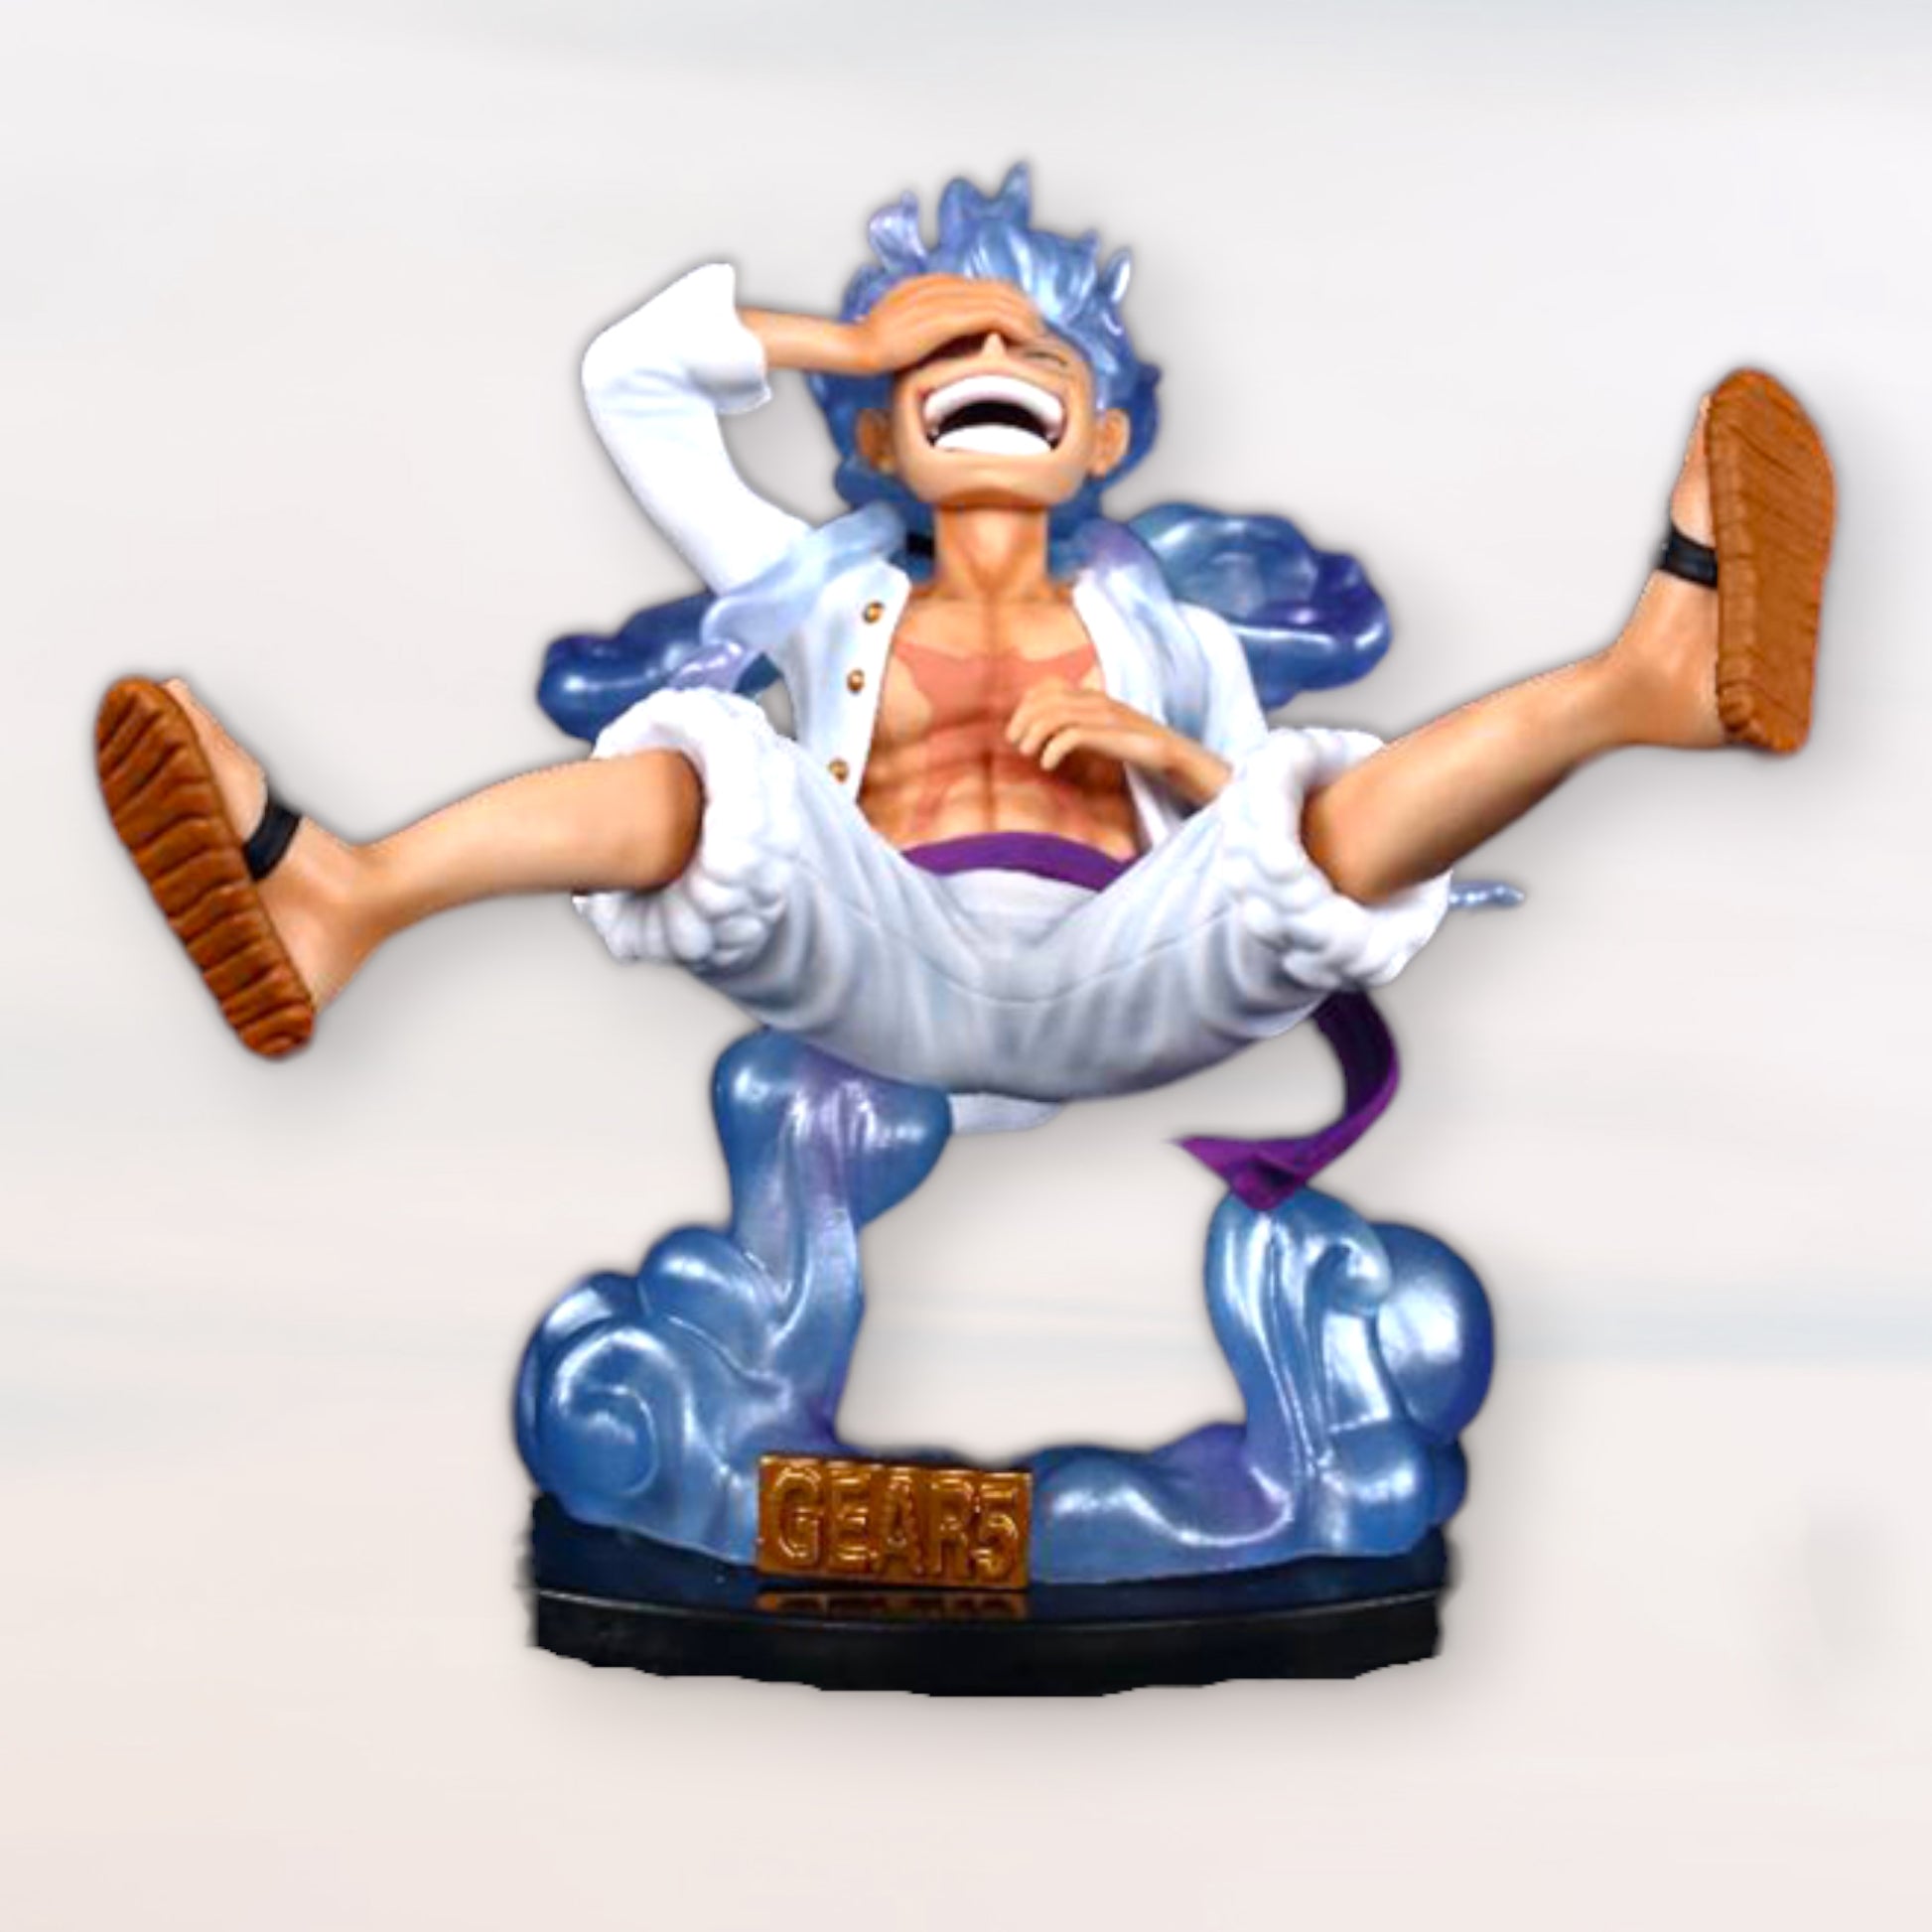 Figurine Monkey D. Luffy Gear 5 - One Piece, Taille: 22 cm, PVC